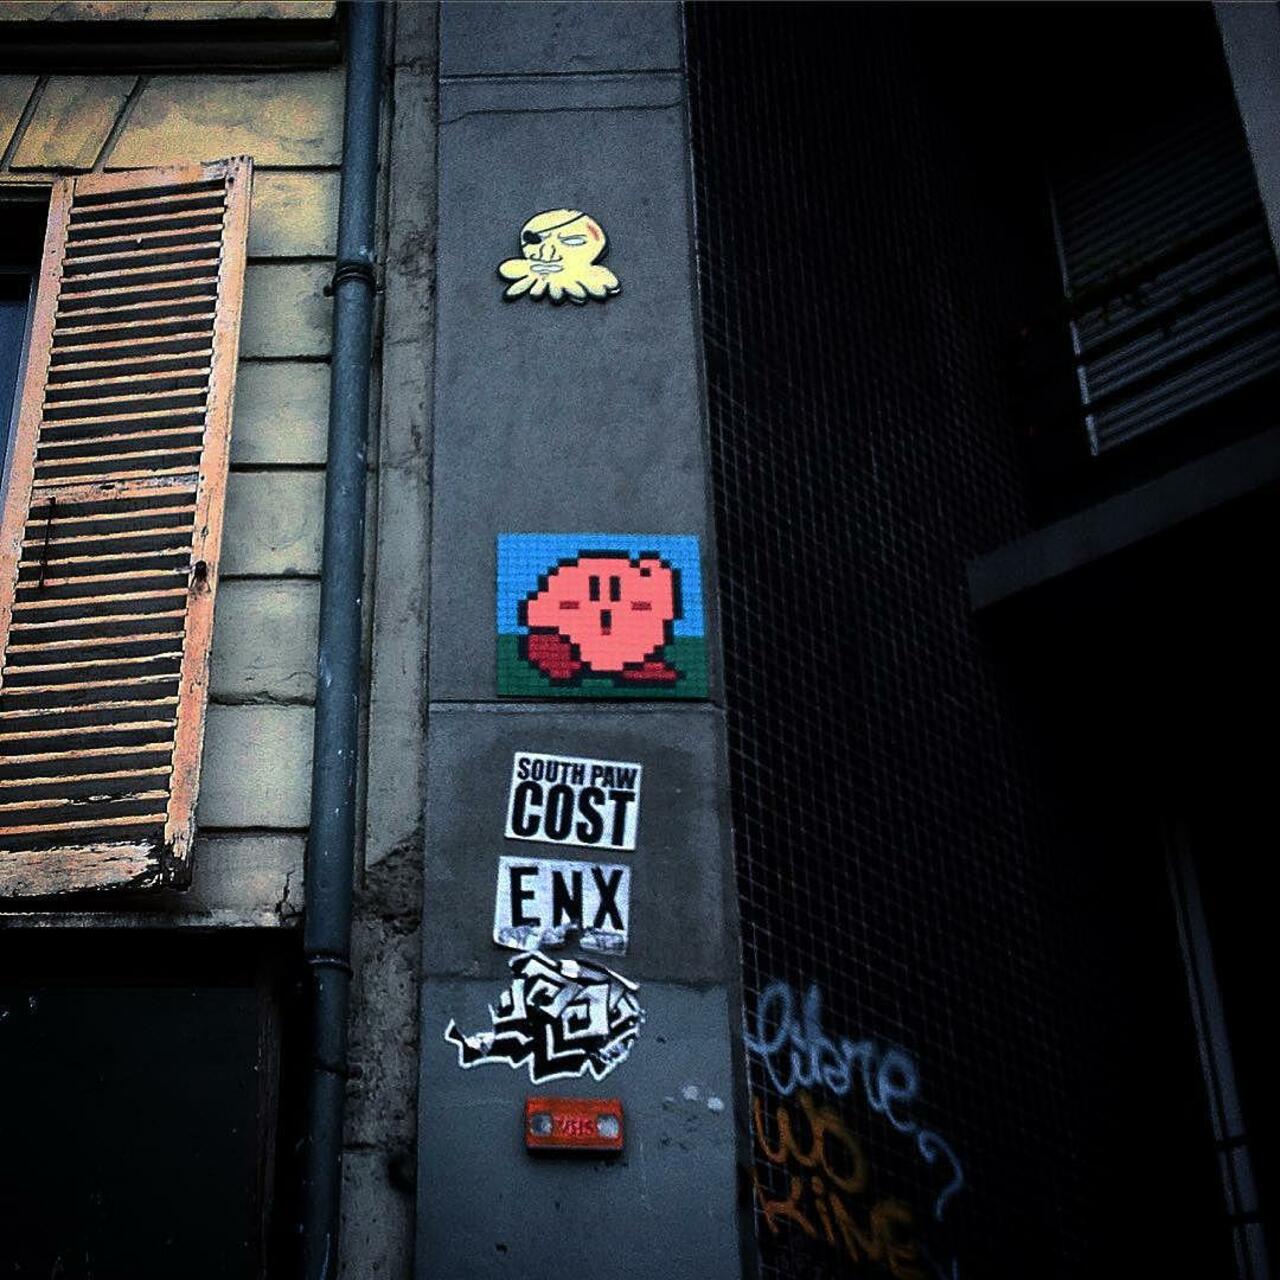 #Paris #graffiti photo by @stefetlinda http://ift.tt/1Khz2qV #StreetArt http://t.co/36ZgTUL0aL